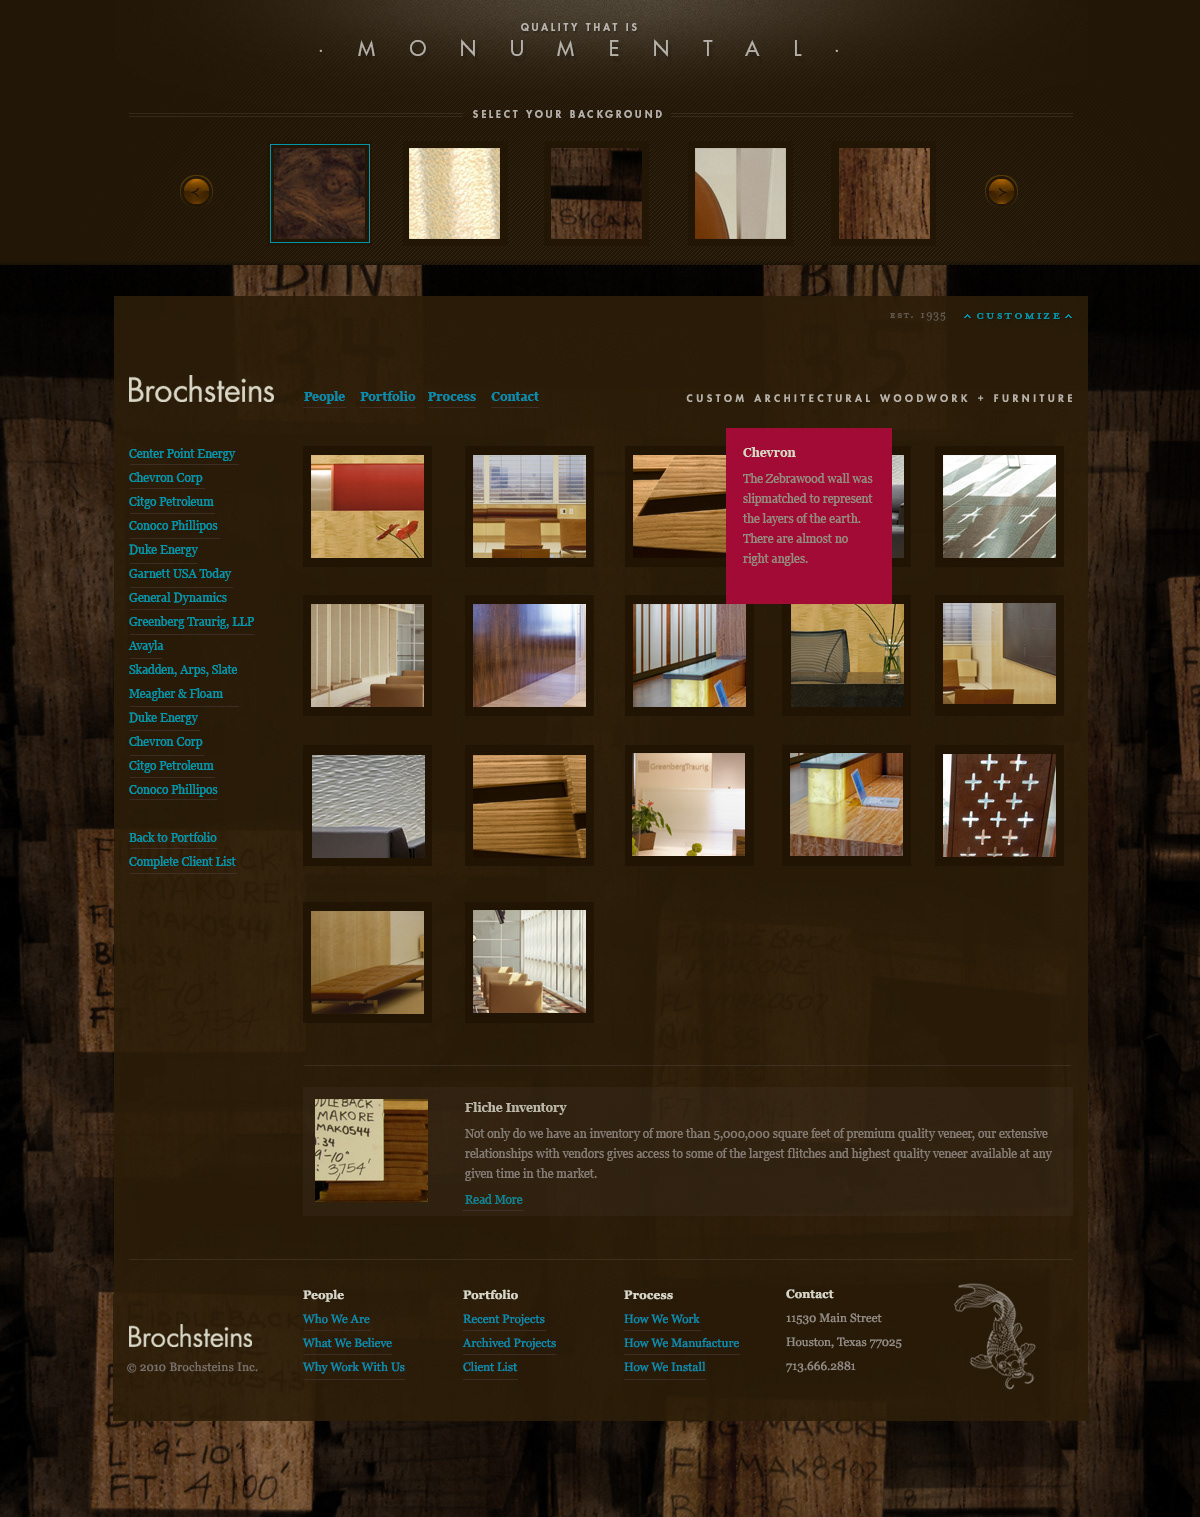 wood veneer exotic woods fabrication Mill work html5 AJAX css3 interface design portfolio